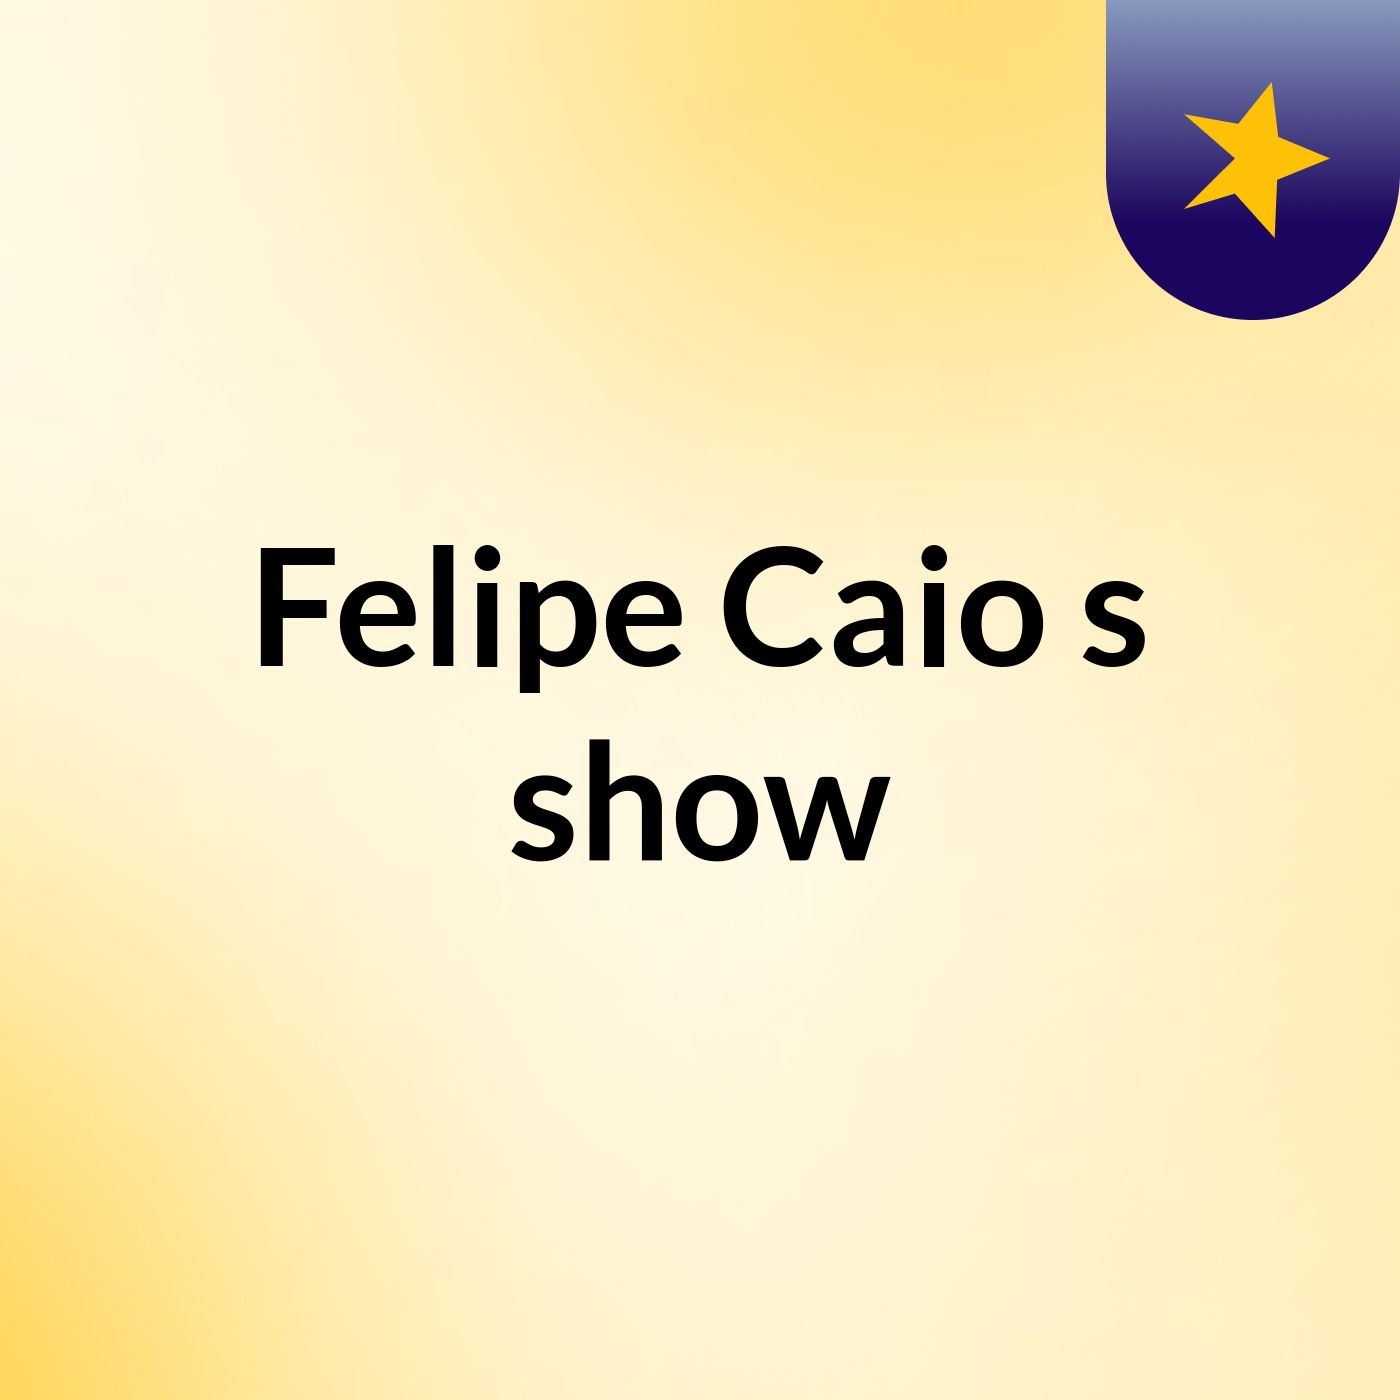 Felipe Caio's show